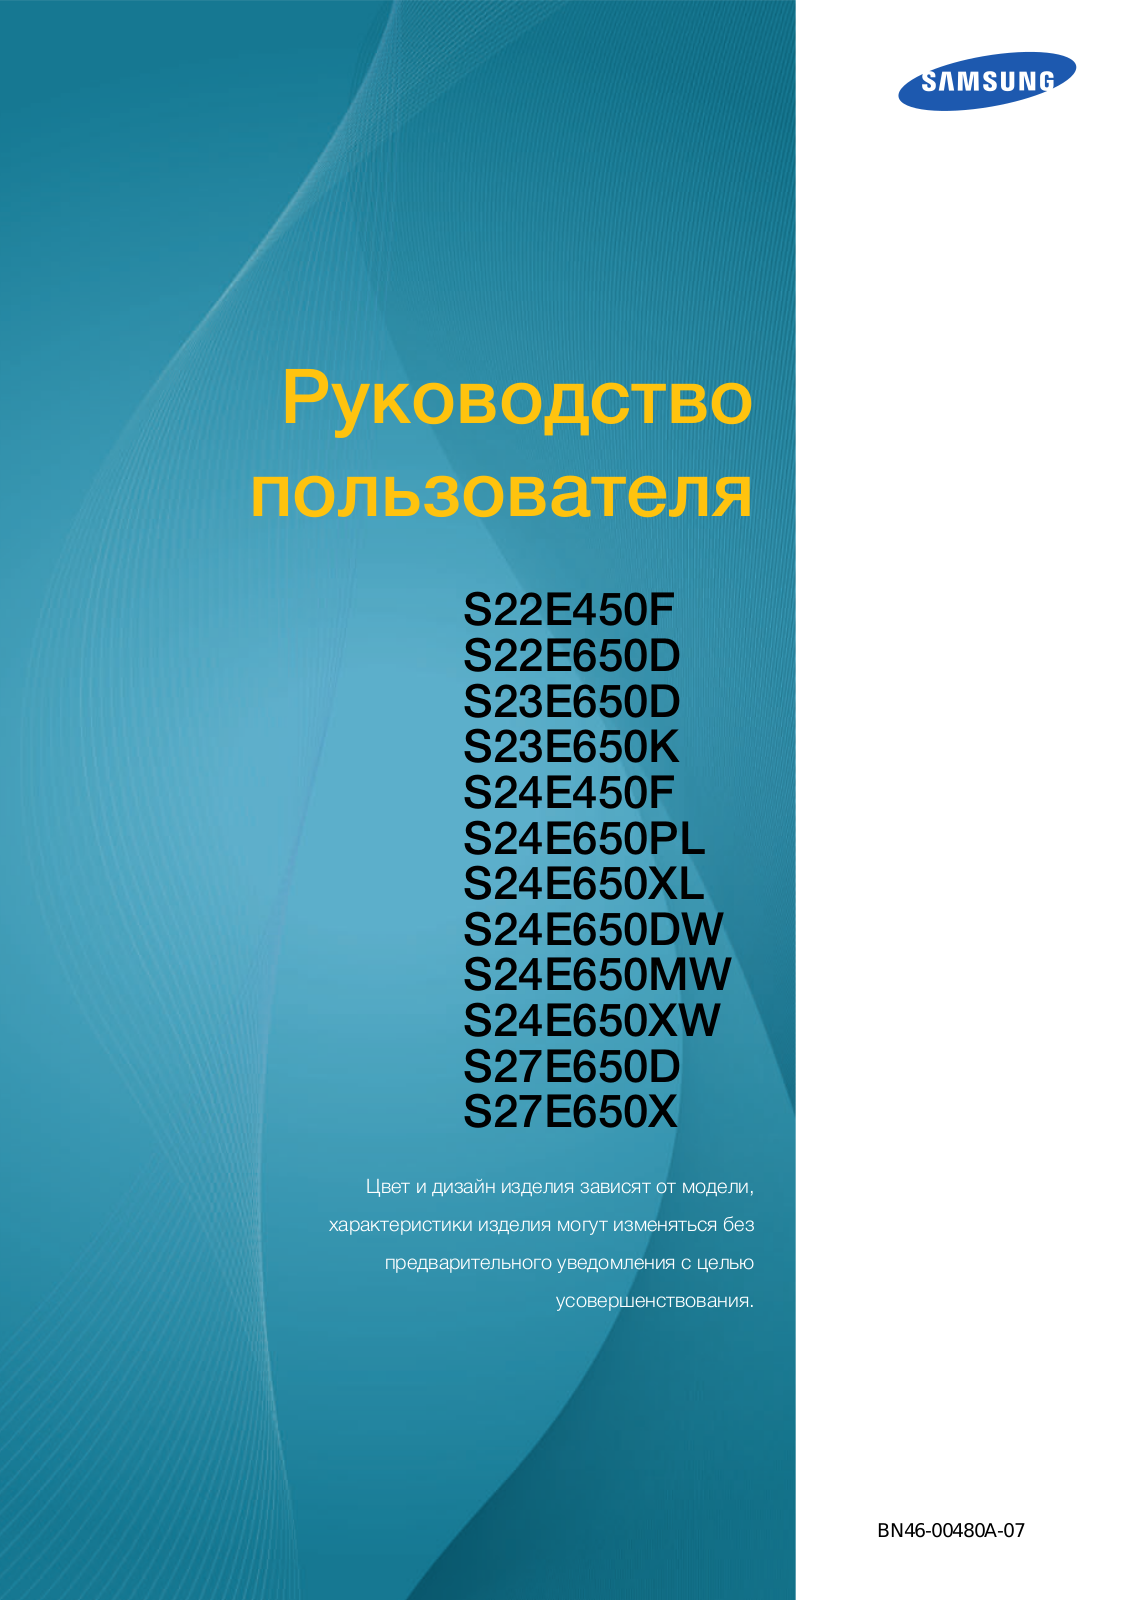 Samsung S23E650D User Manual